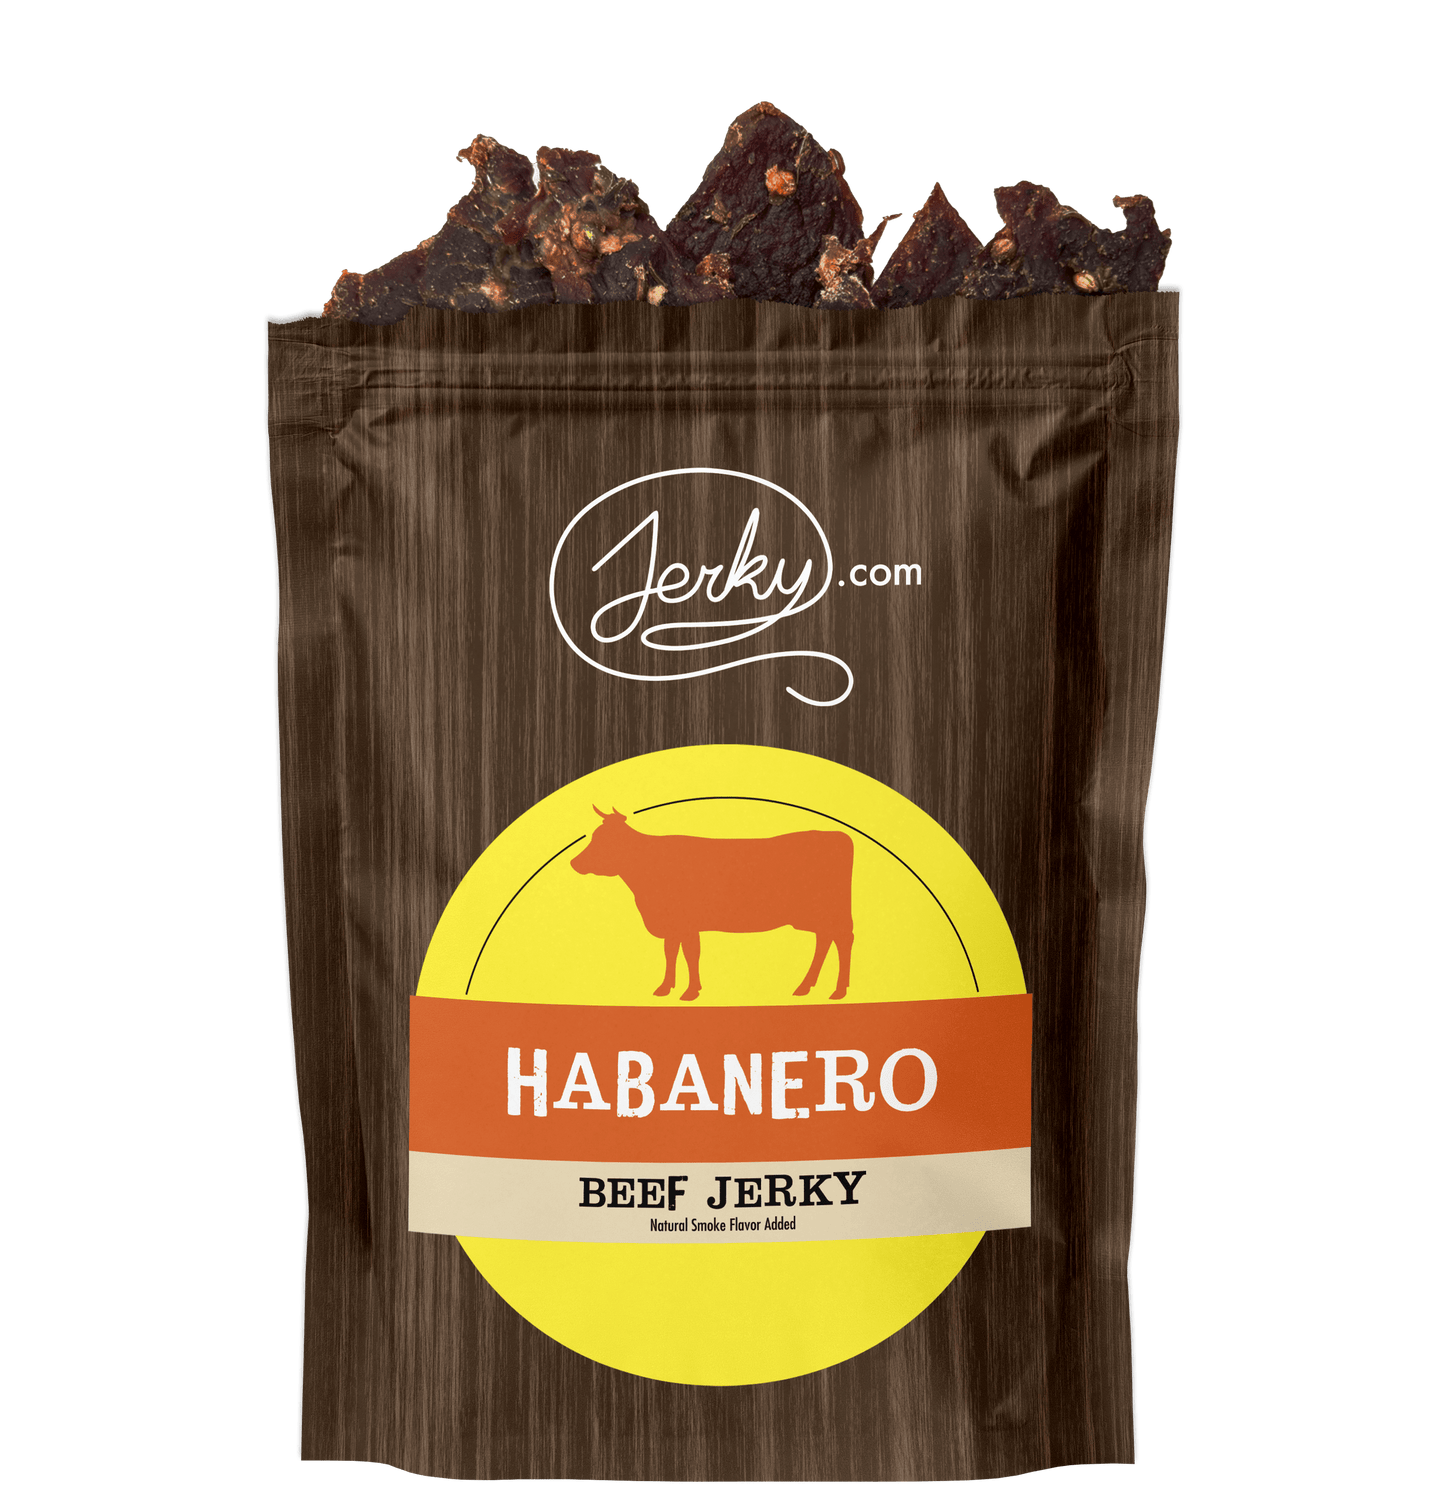 All-Natural Beef Jerky - Habanero by Jerky.com